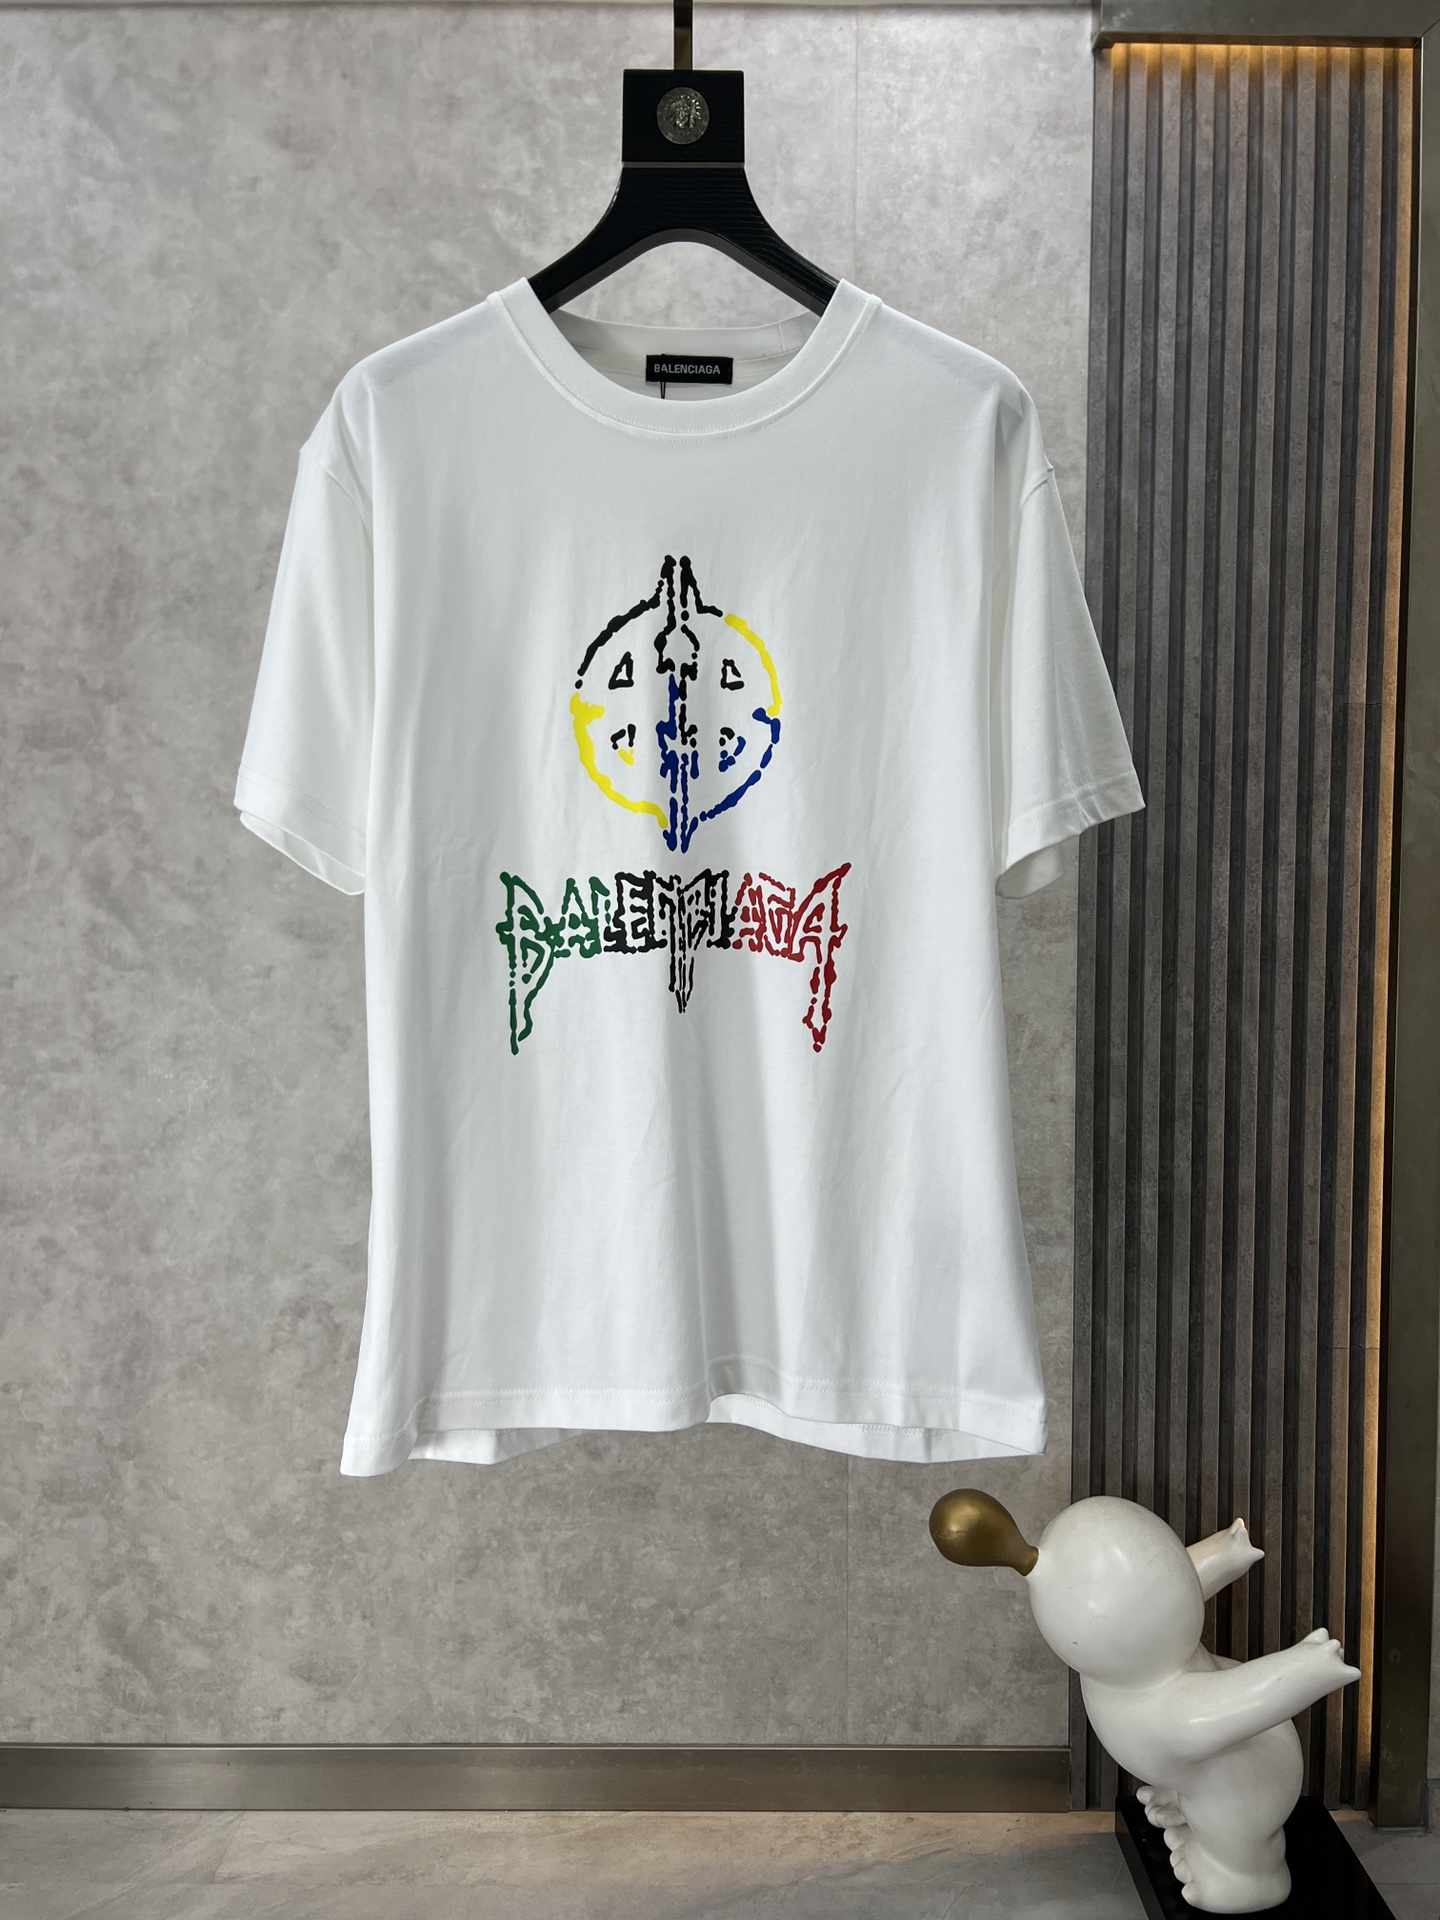 2023 Replica
 Balenciaga High
 Clothing T-Shirt Black White Unisex Cotton Spring/Summer Collection Fashion Short Sleeve